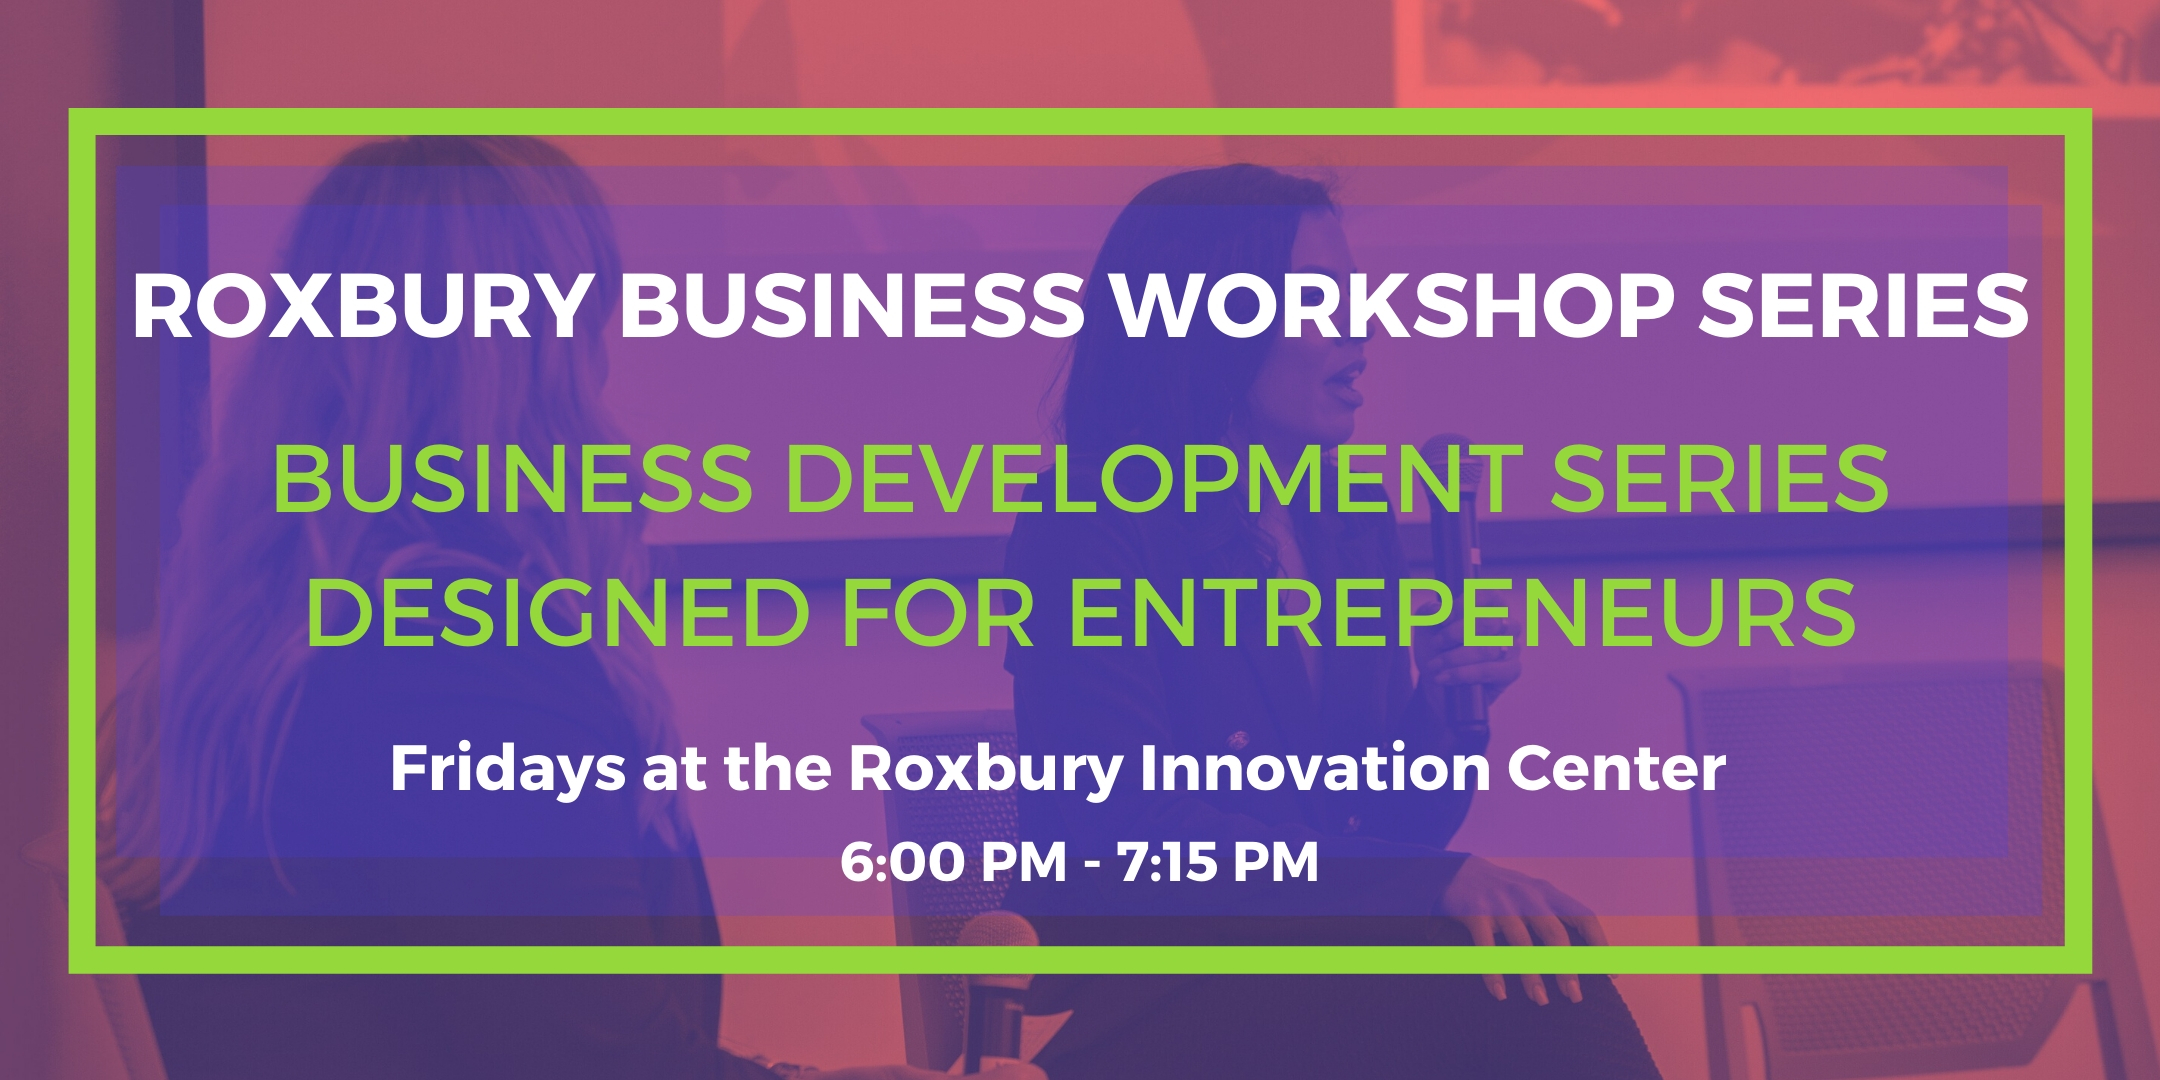 Roxbury Business Workshop Series